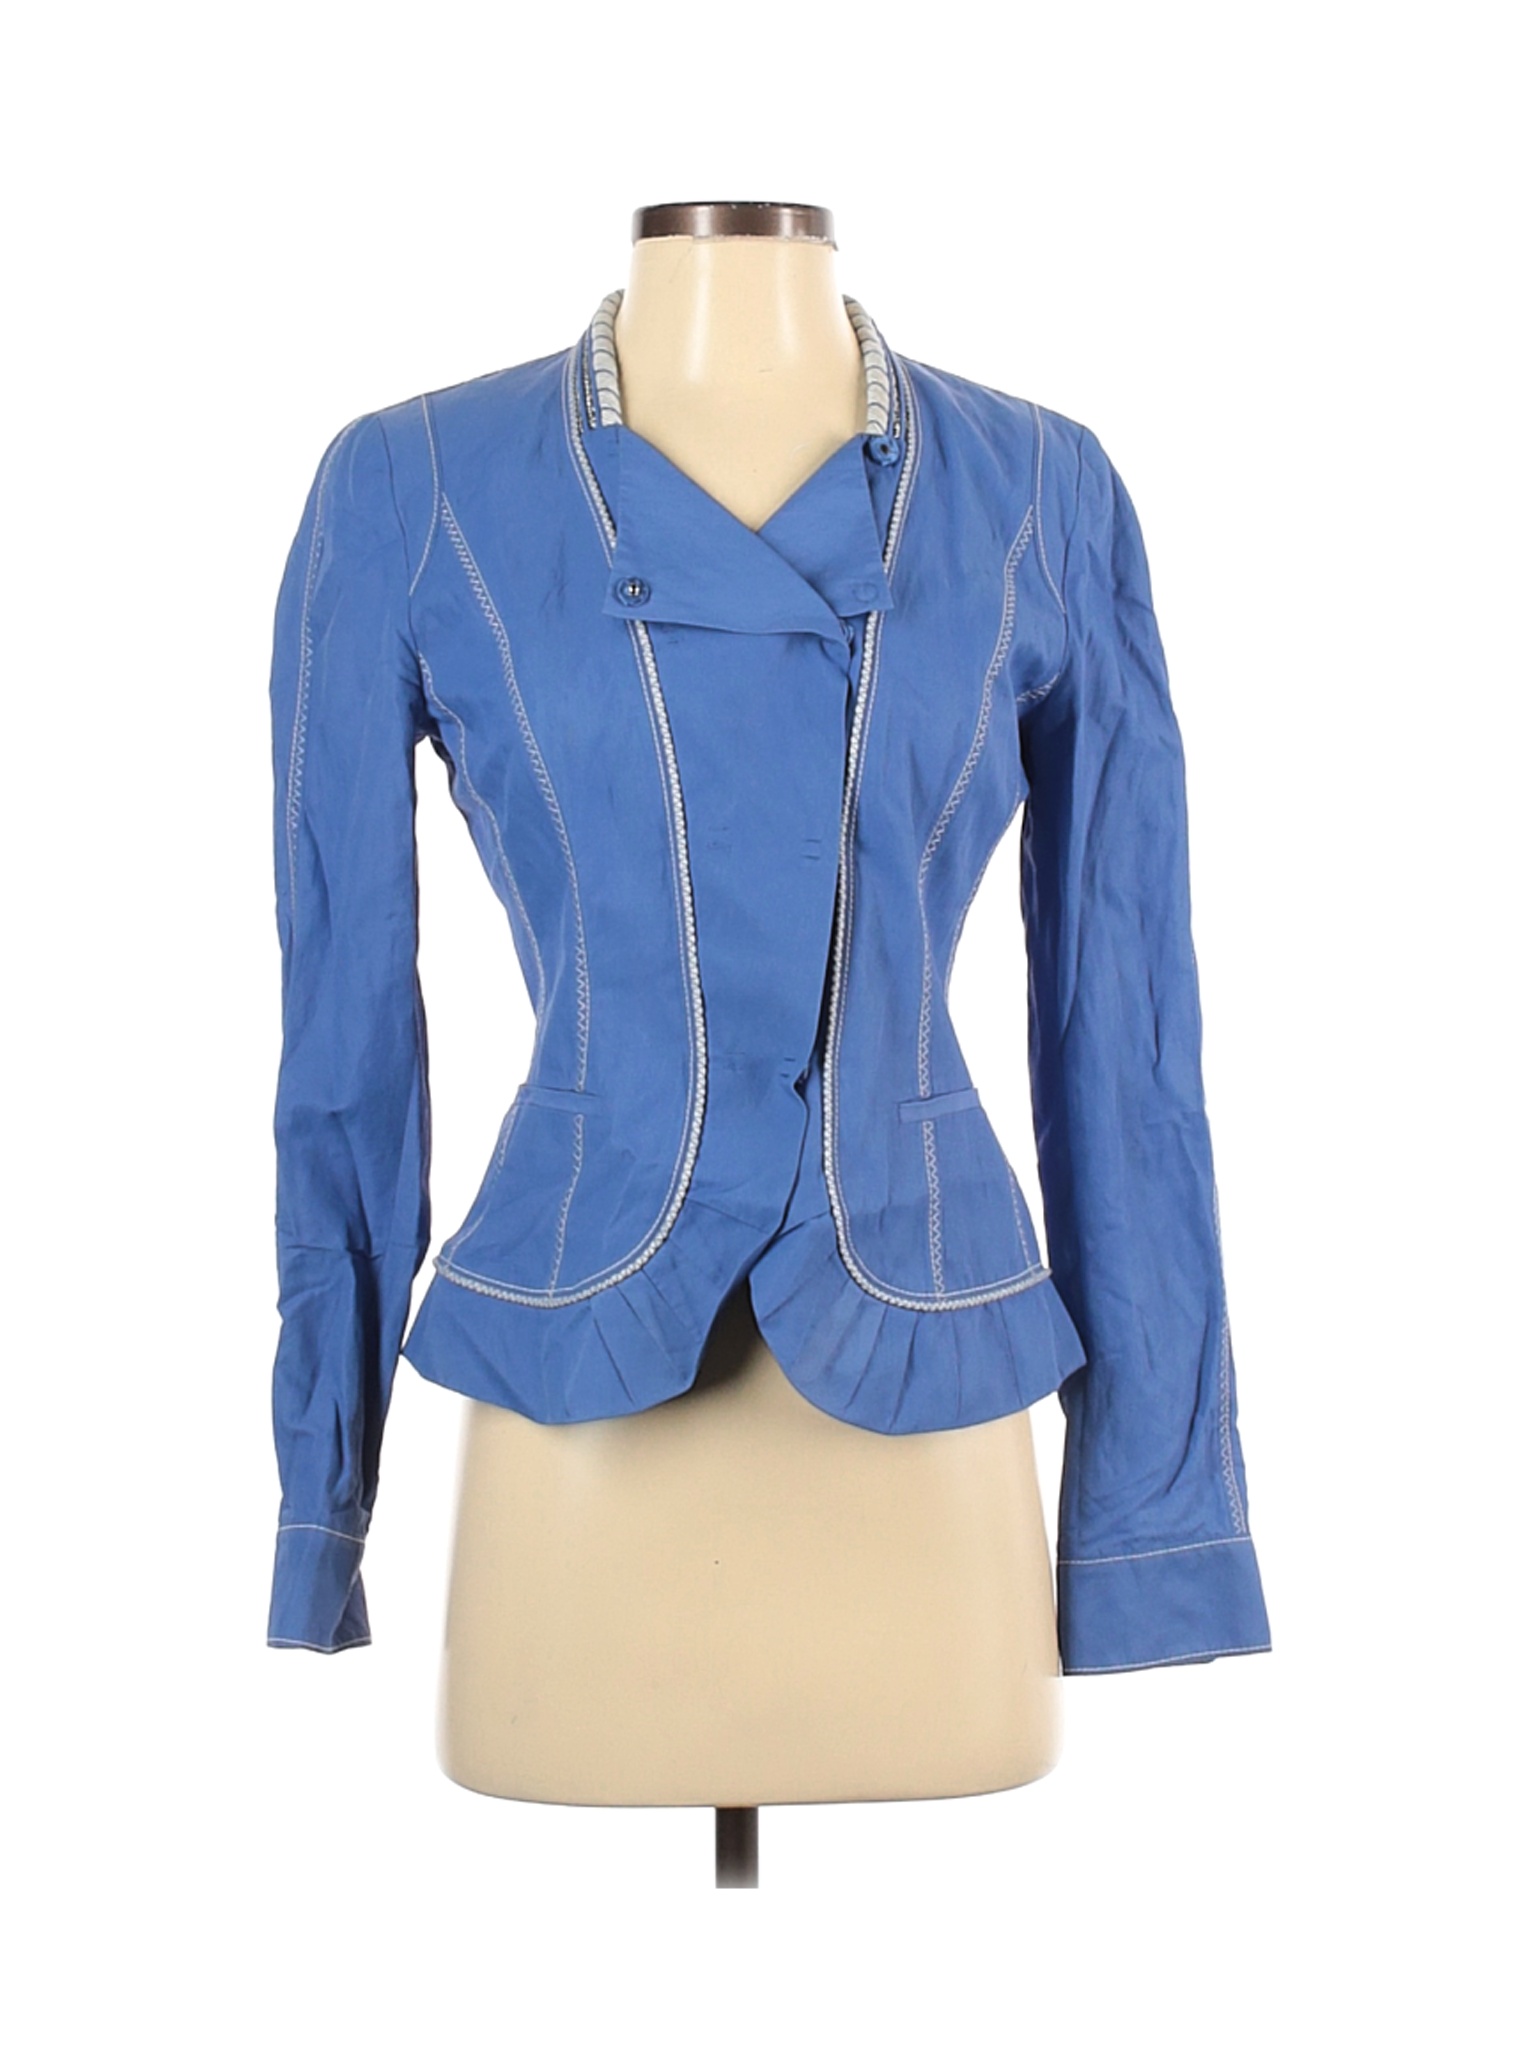 Elie Tahari Women Blue Blazer XS | eBay